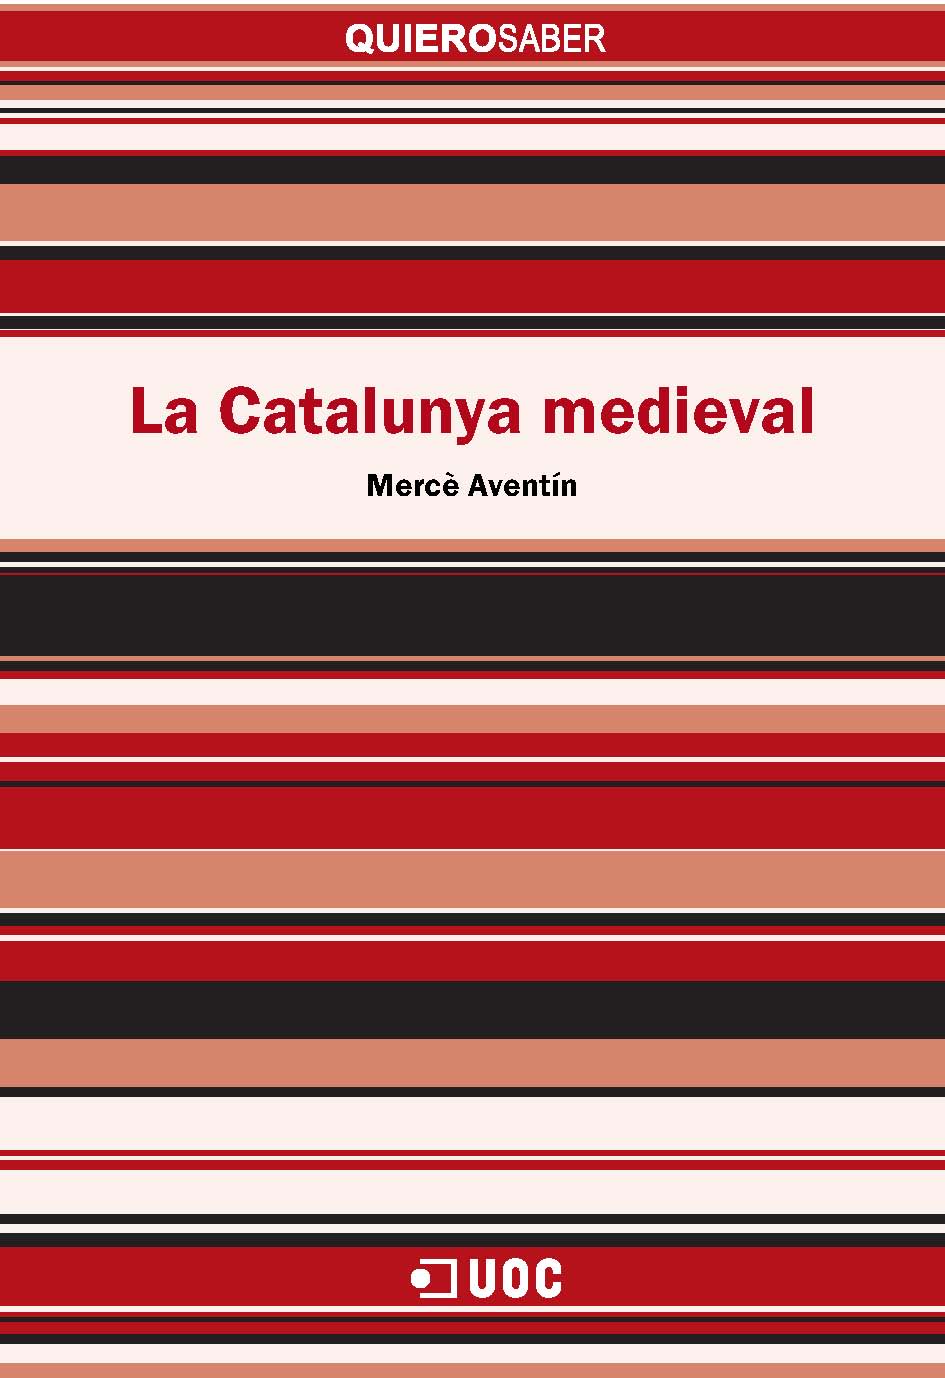 La CataluÃ±a feudal